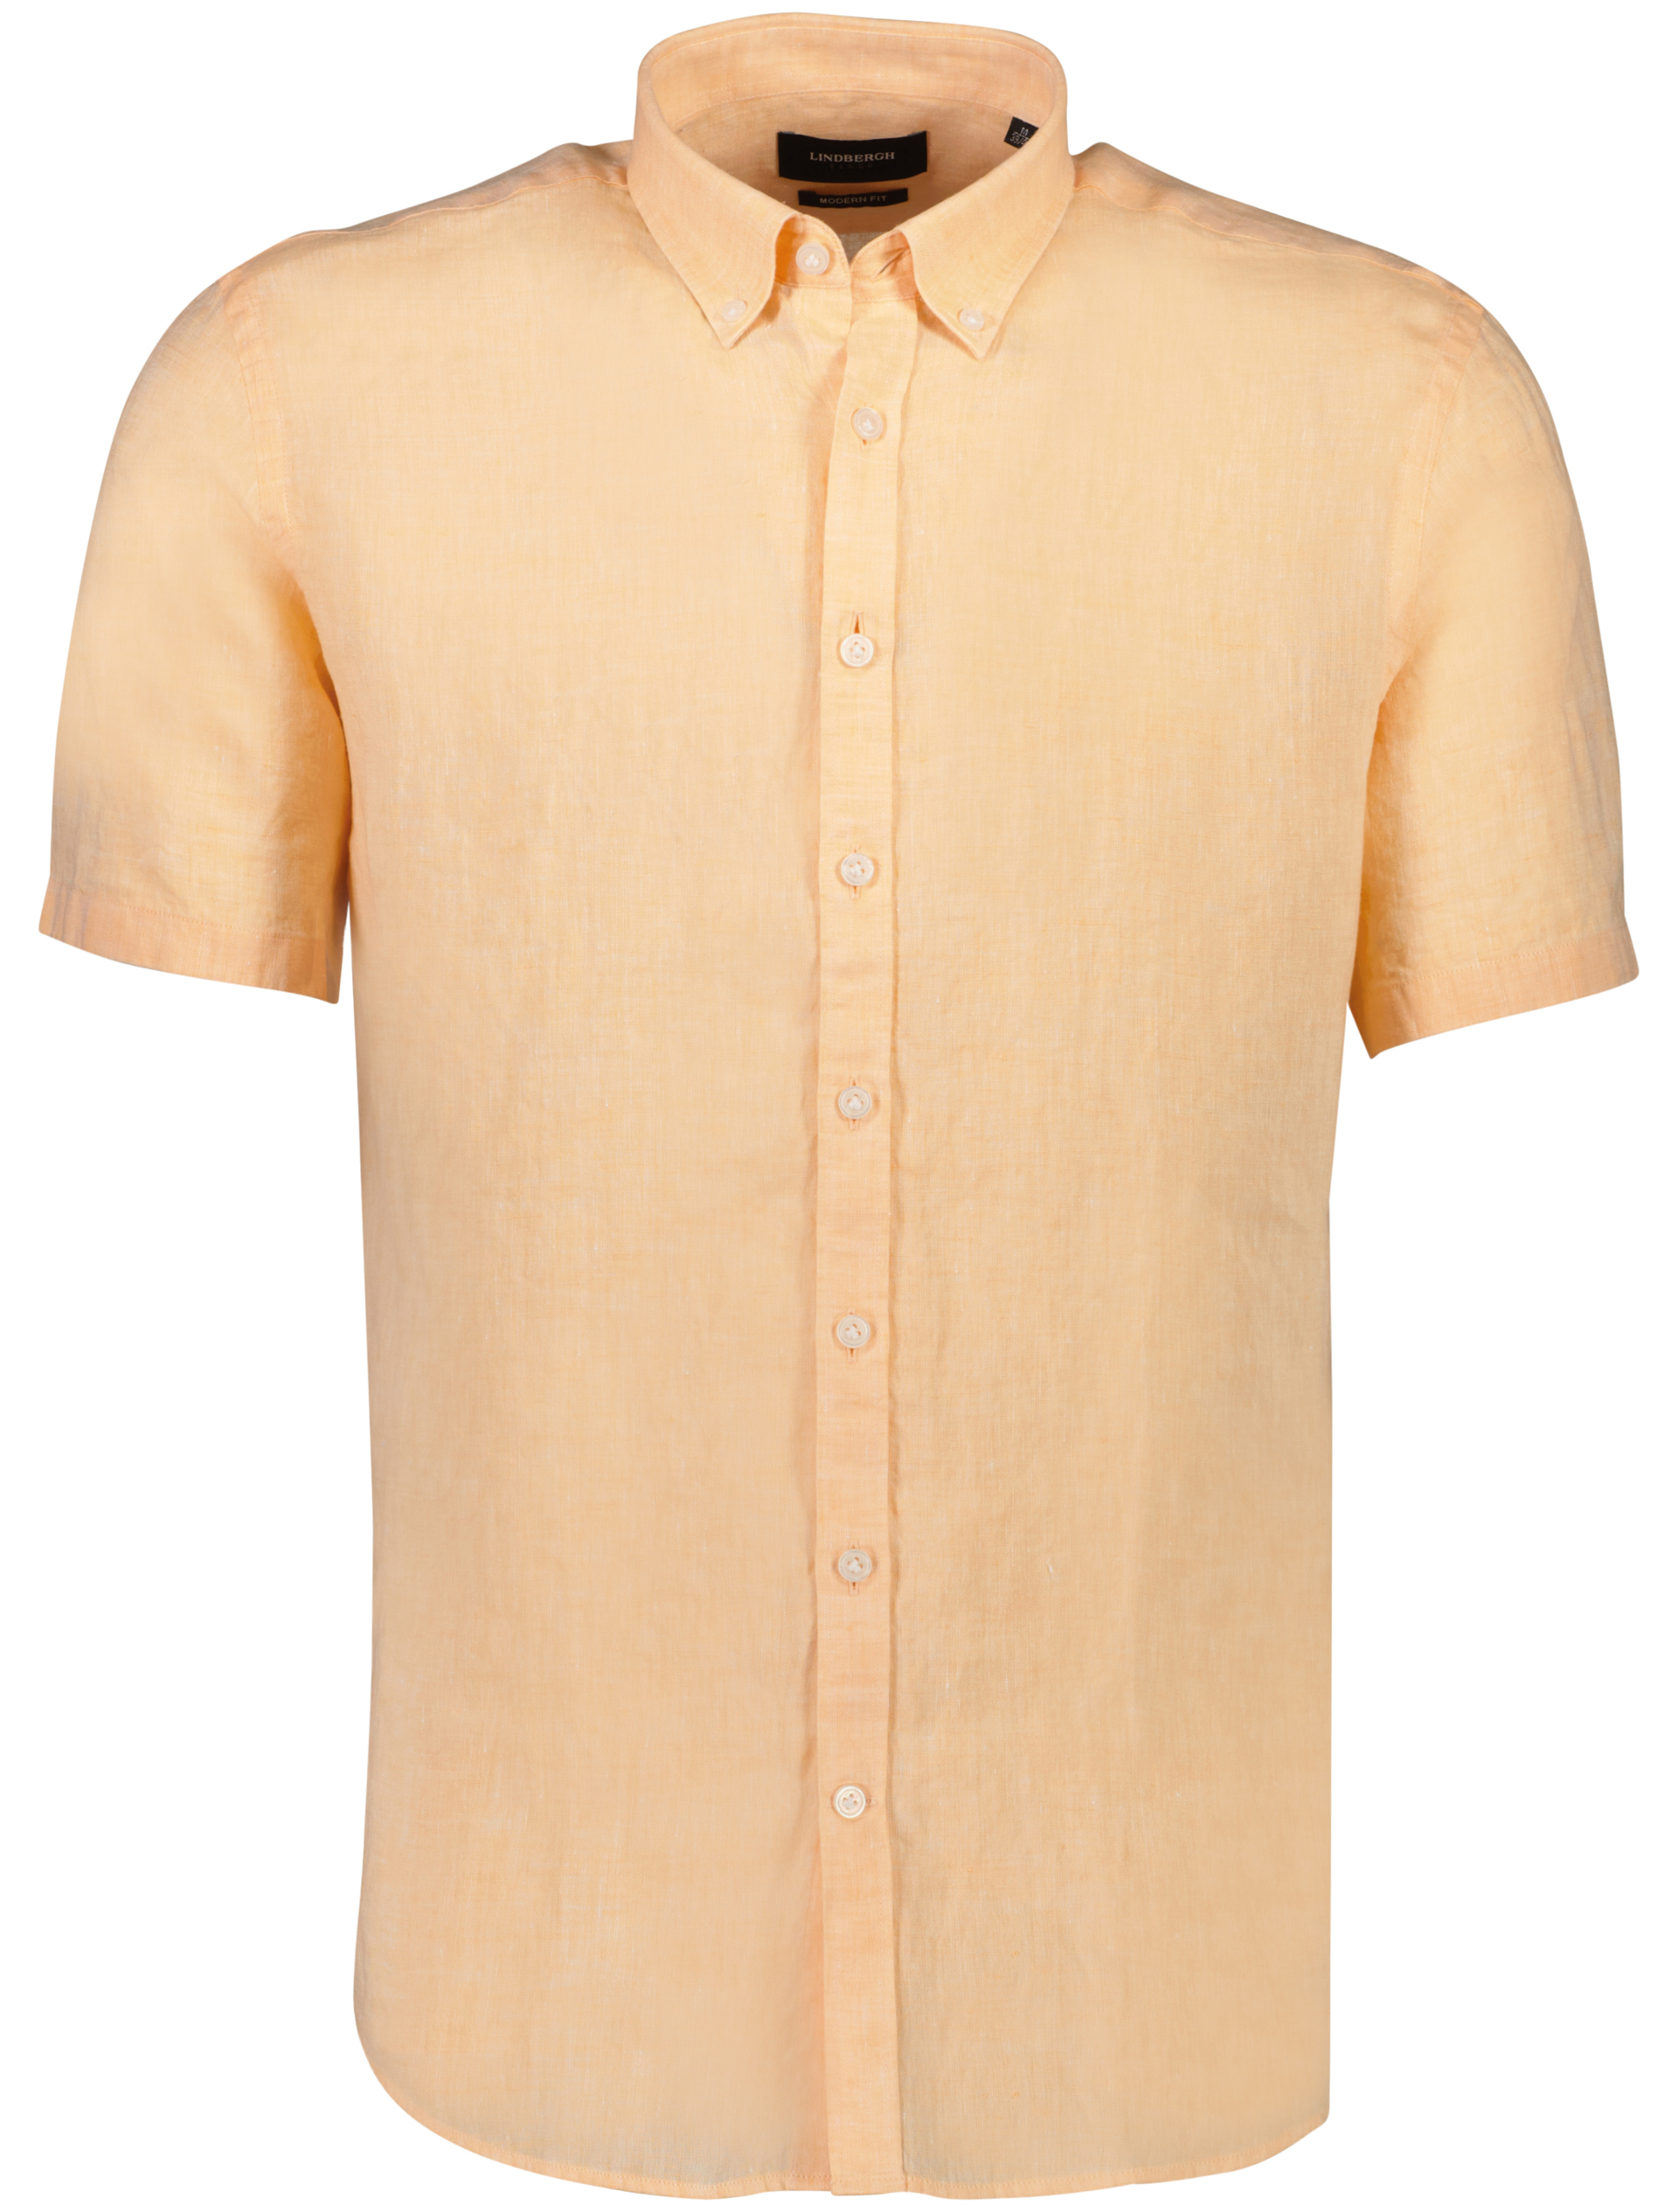 Lindbergh Linen shirt orange / lt apricot mel